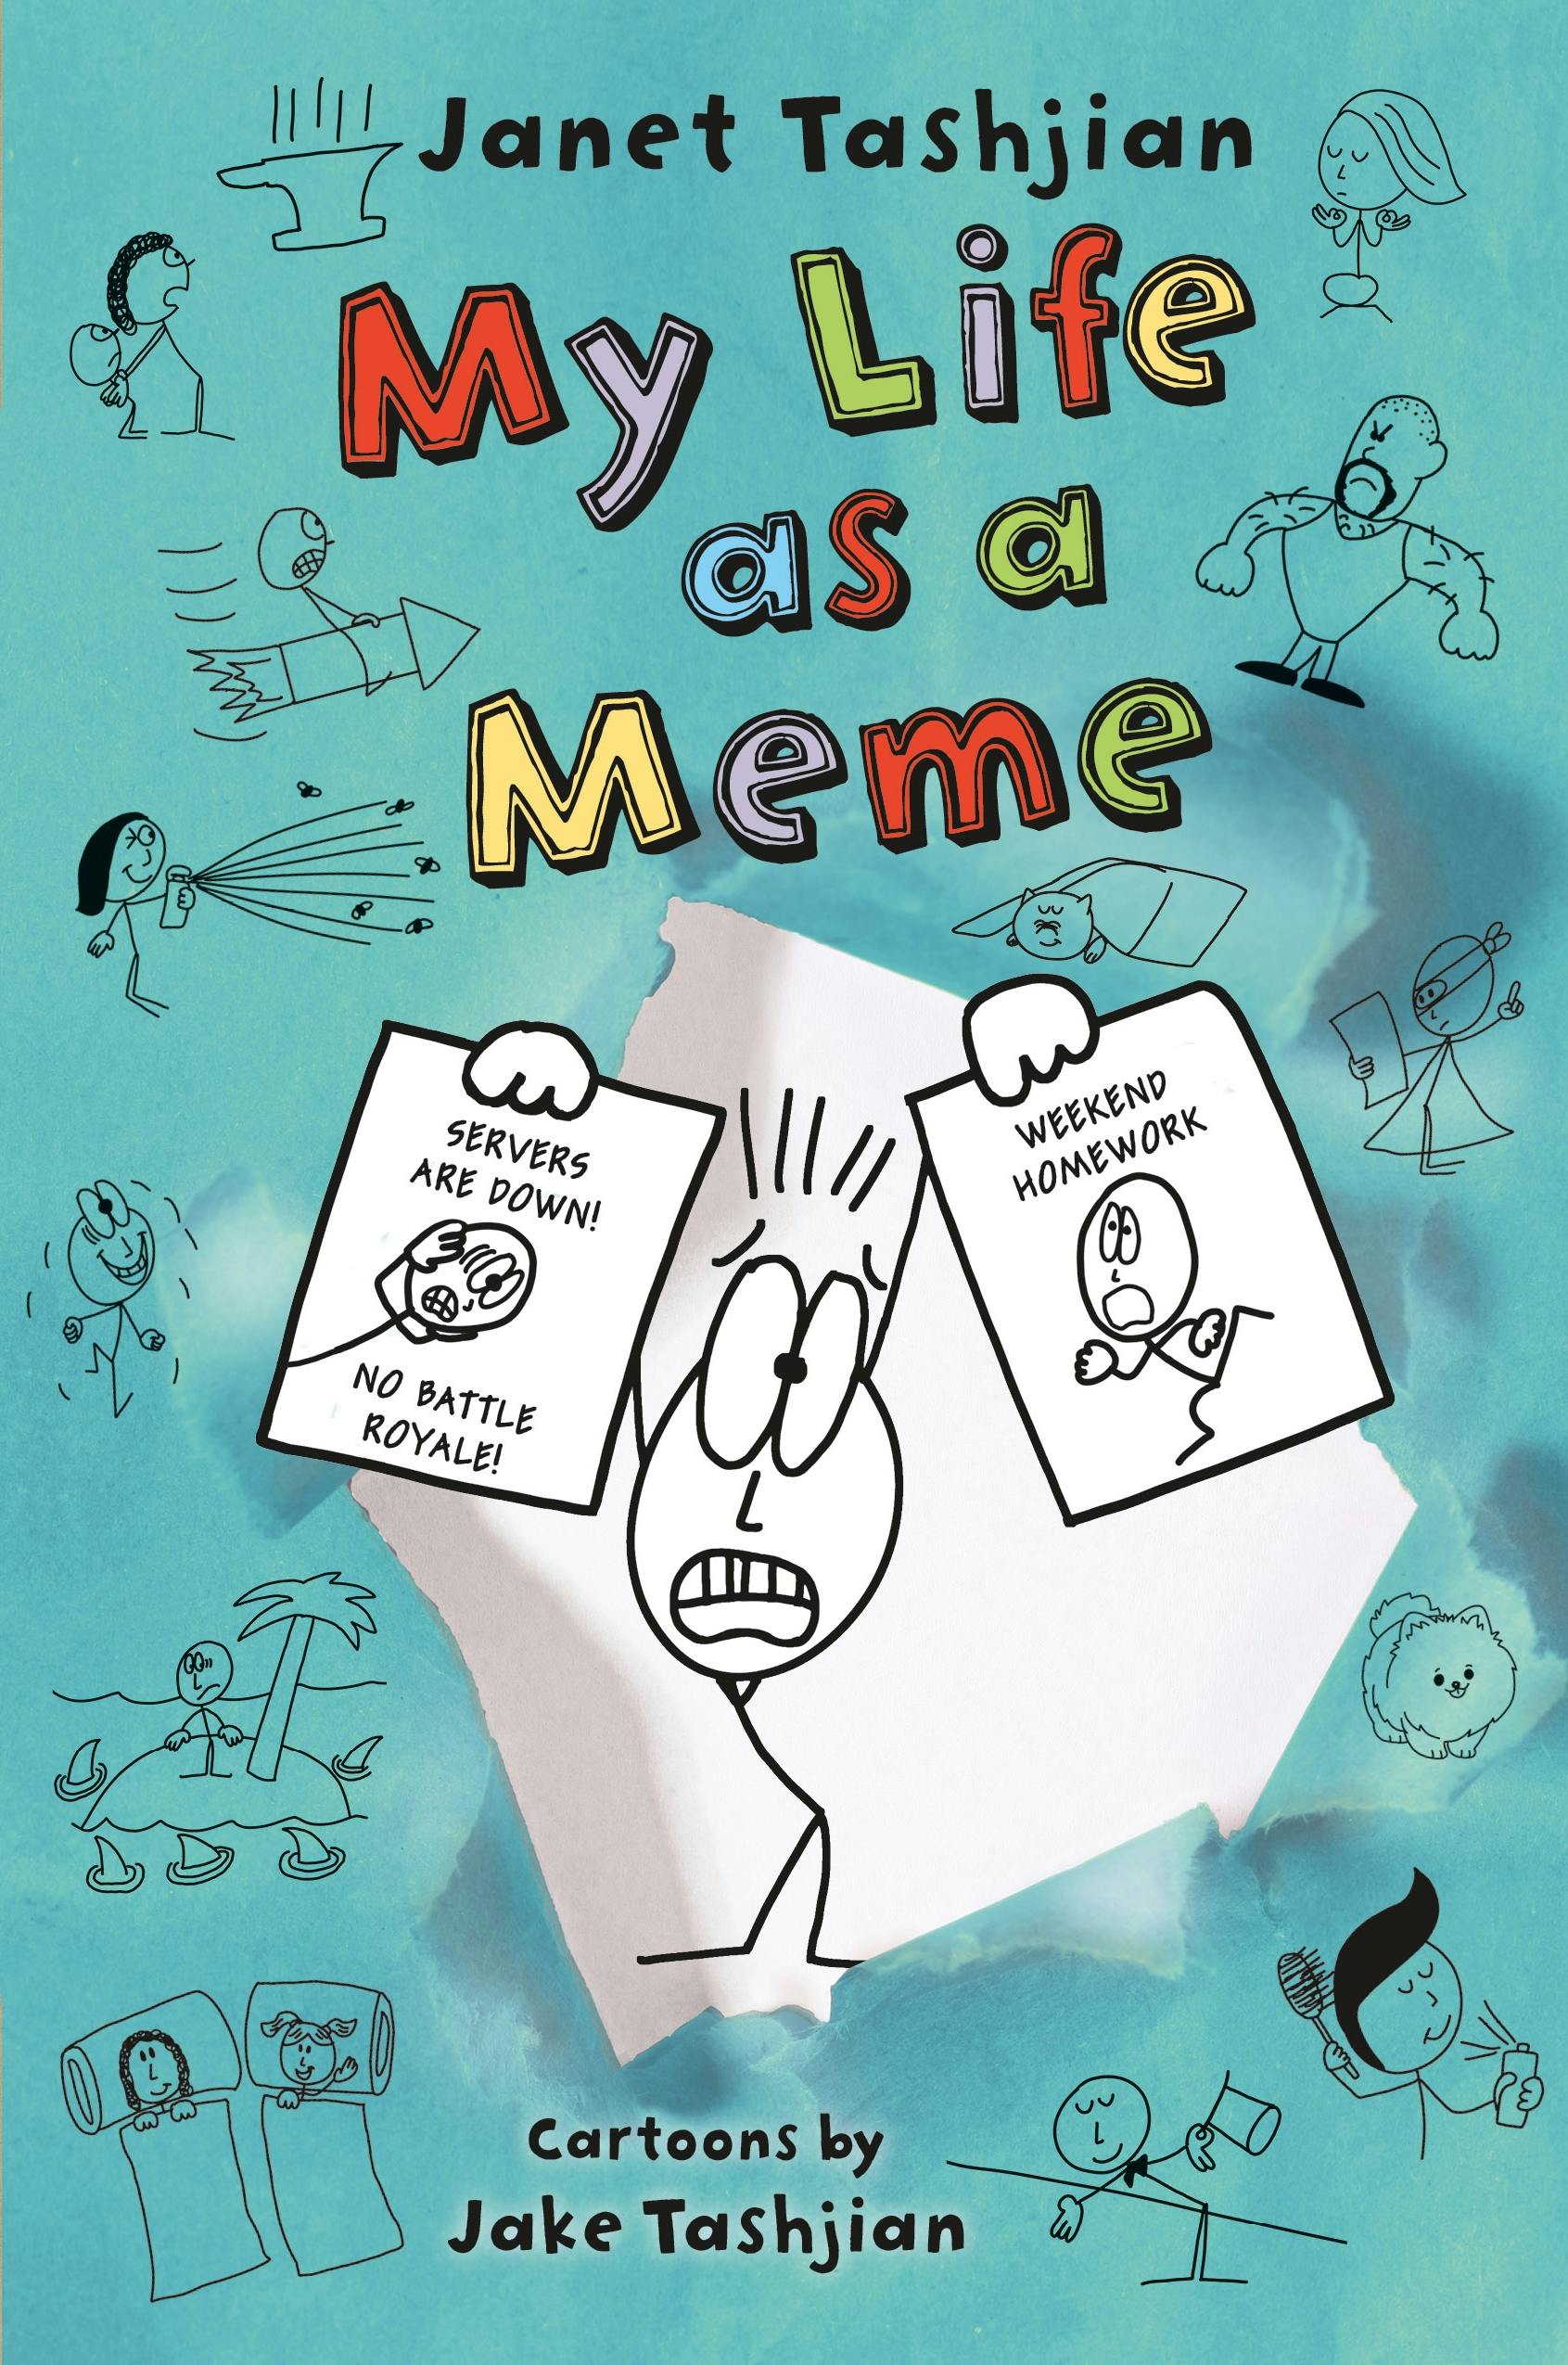 Meme Maker - Heheheha I've never even read a book Meme Generator!